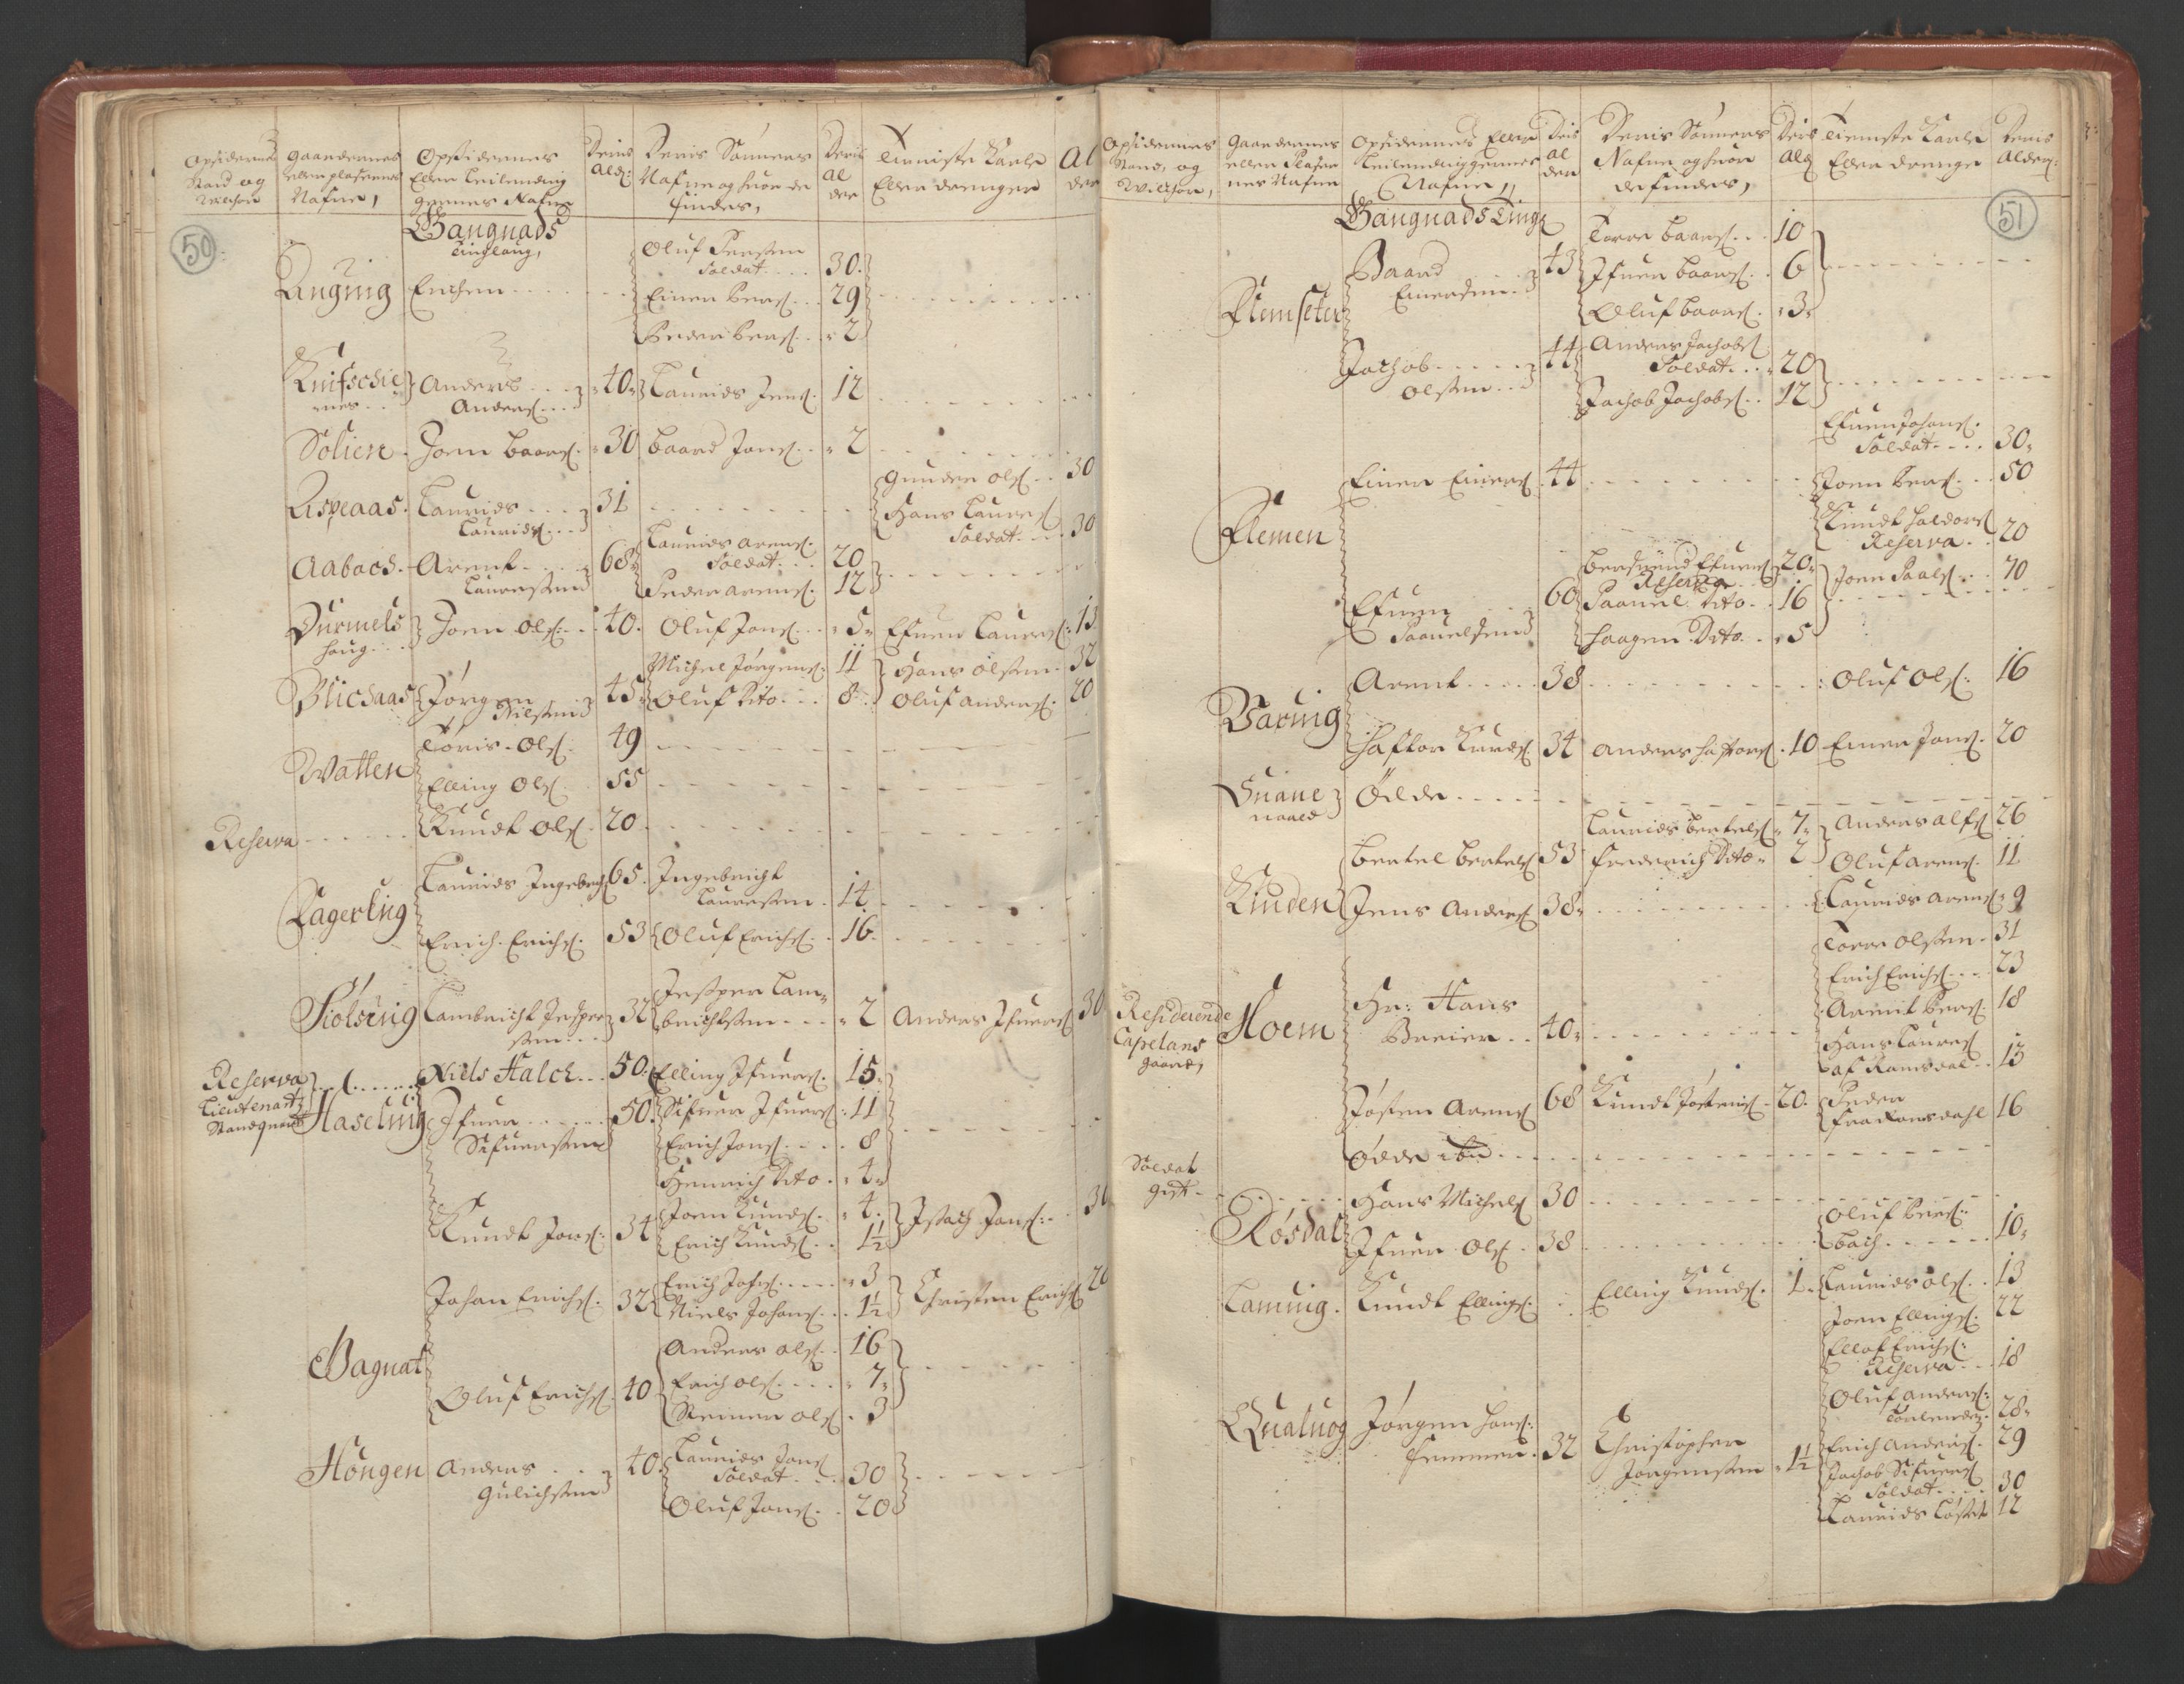 RA, Manntallet 1701, nr. 11: Nordmøre fogderi og Romsdal fogderi, 1701, s. 50-51